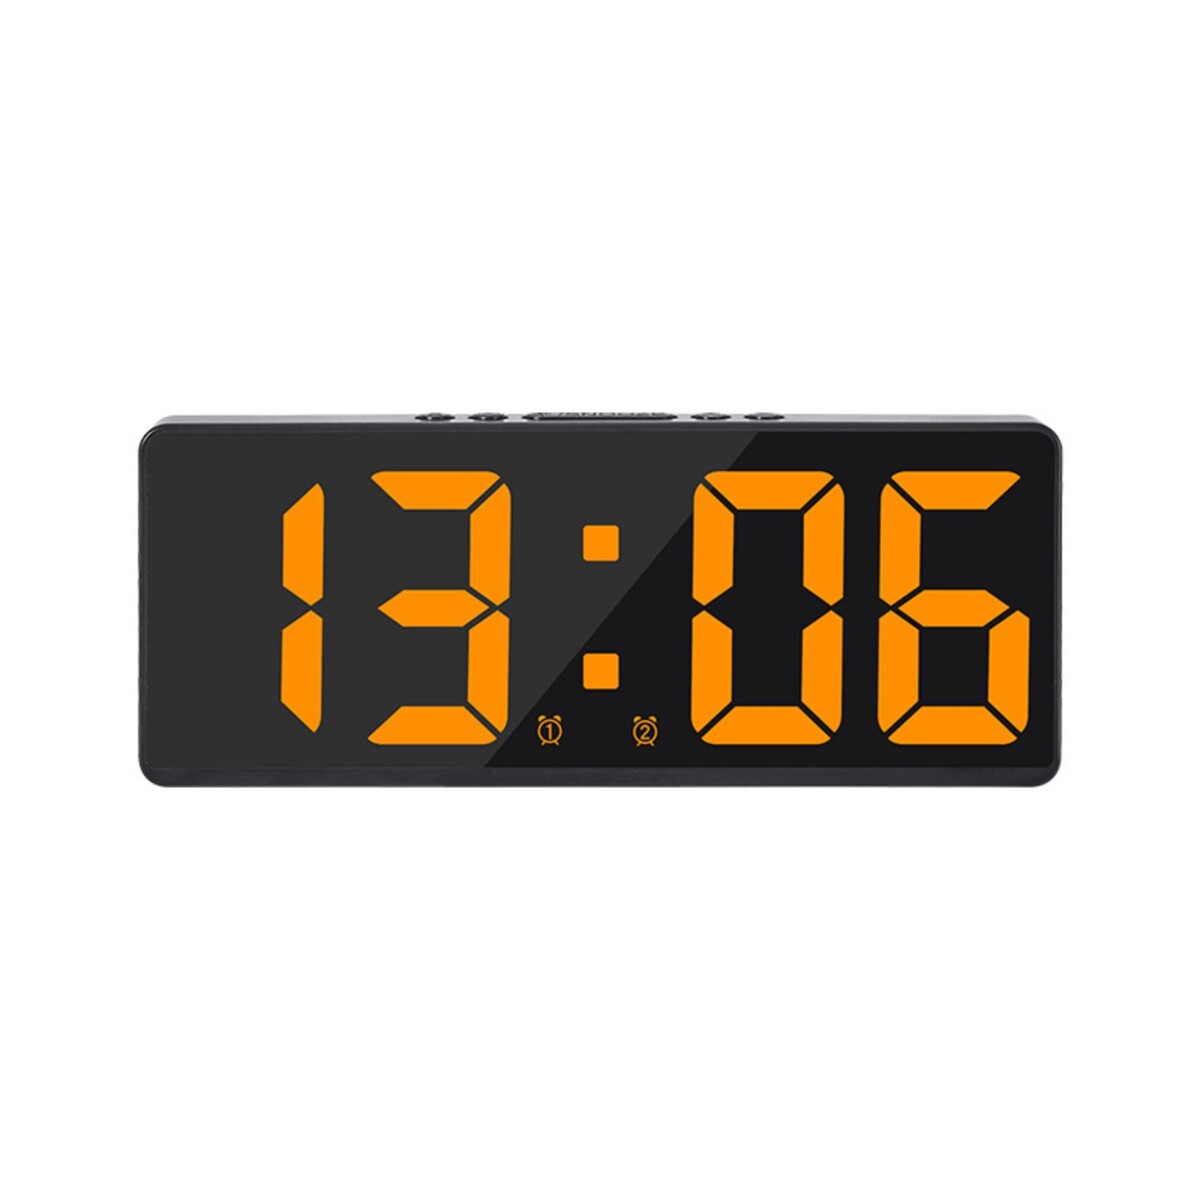 Часы - будильник электронные настольные с термометром, календарем, 15 х 6.3 см, ааа, usb часы электронные настенные настольные с будильником 2400 мач 3 5 х 7 х 26 5 см